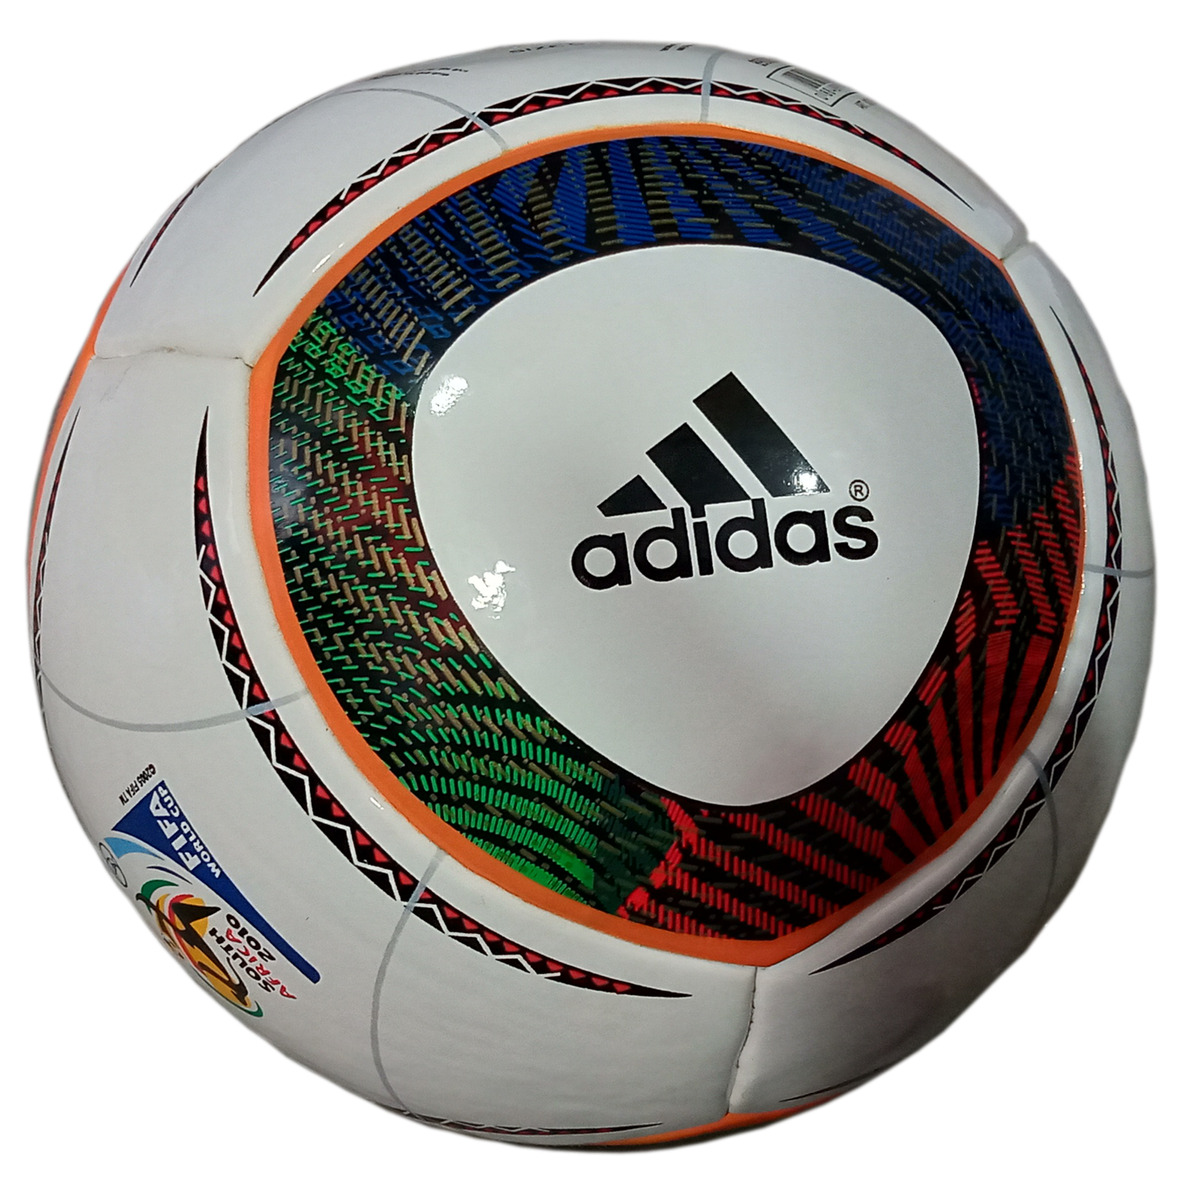 Adidas Ball Jabulani Match Soccer South Africa FIFA World Cup 2010 Size 5